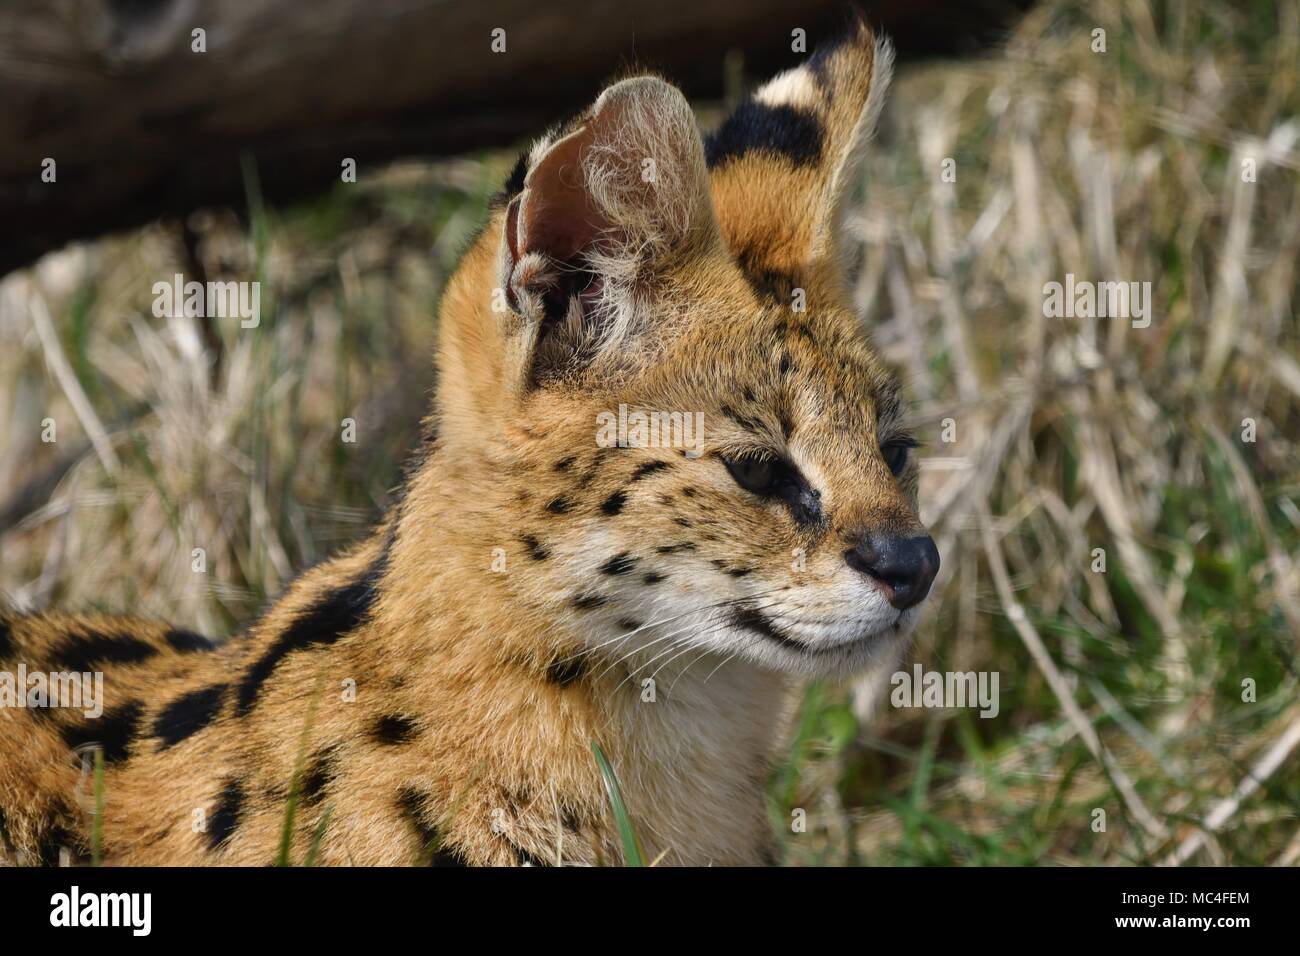 Leptailurus serval - wilde afrikanische Katze, Nahaufnahme, isolierte Porträt Leptailurus serval - wilde afrikanische Katze, isolierte Porträt schließen Stockfoto